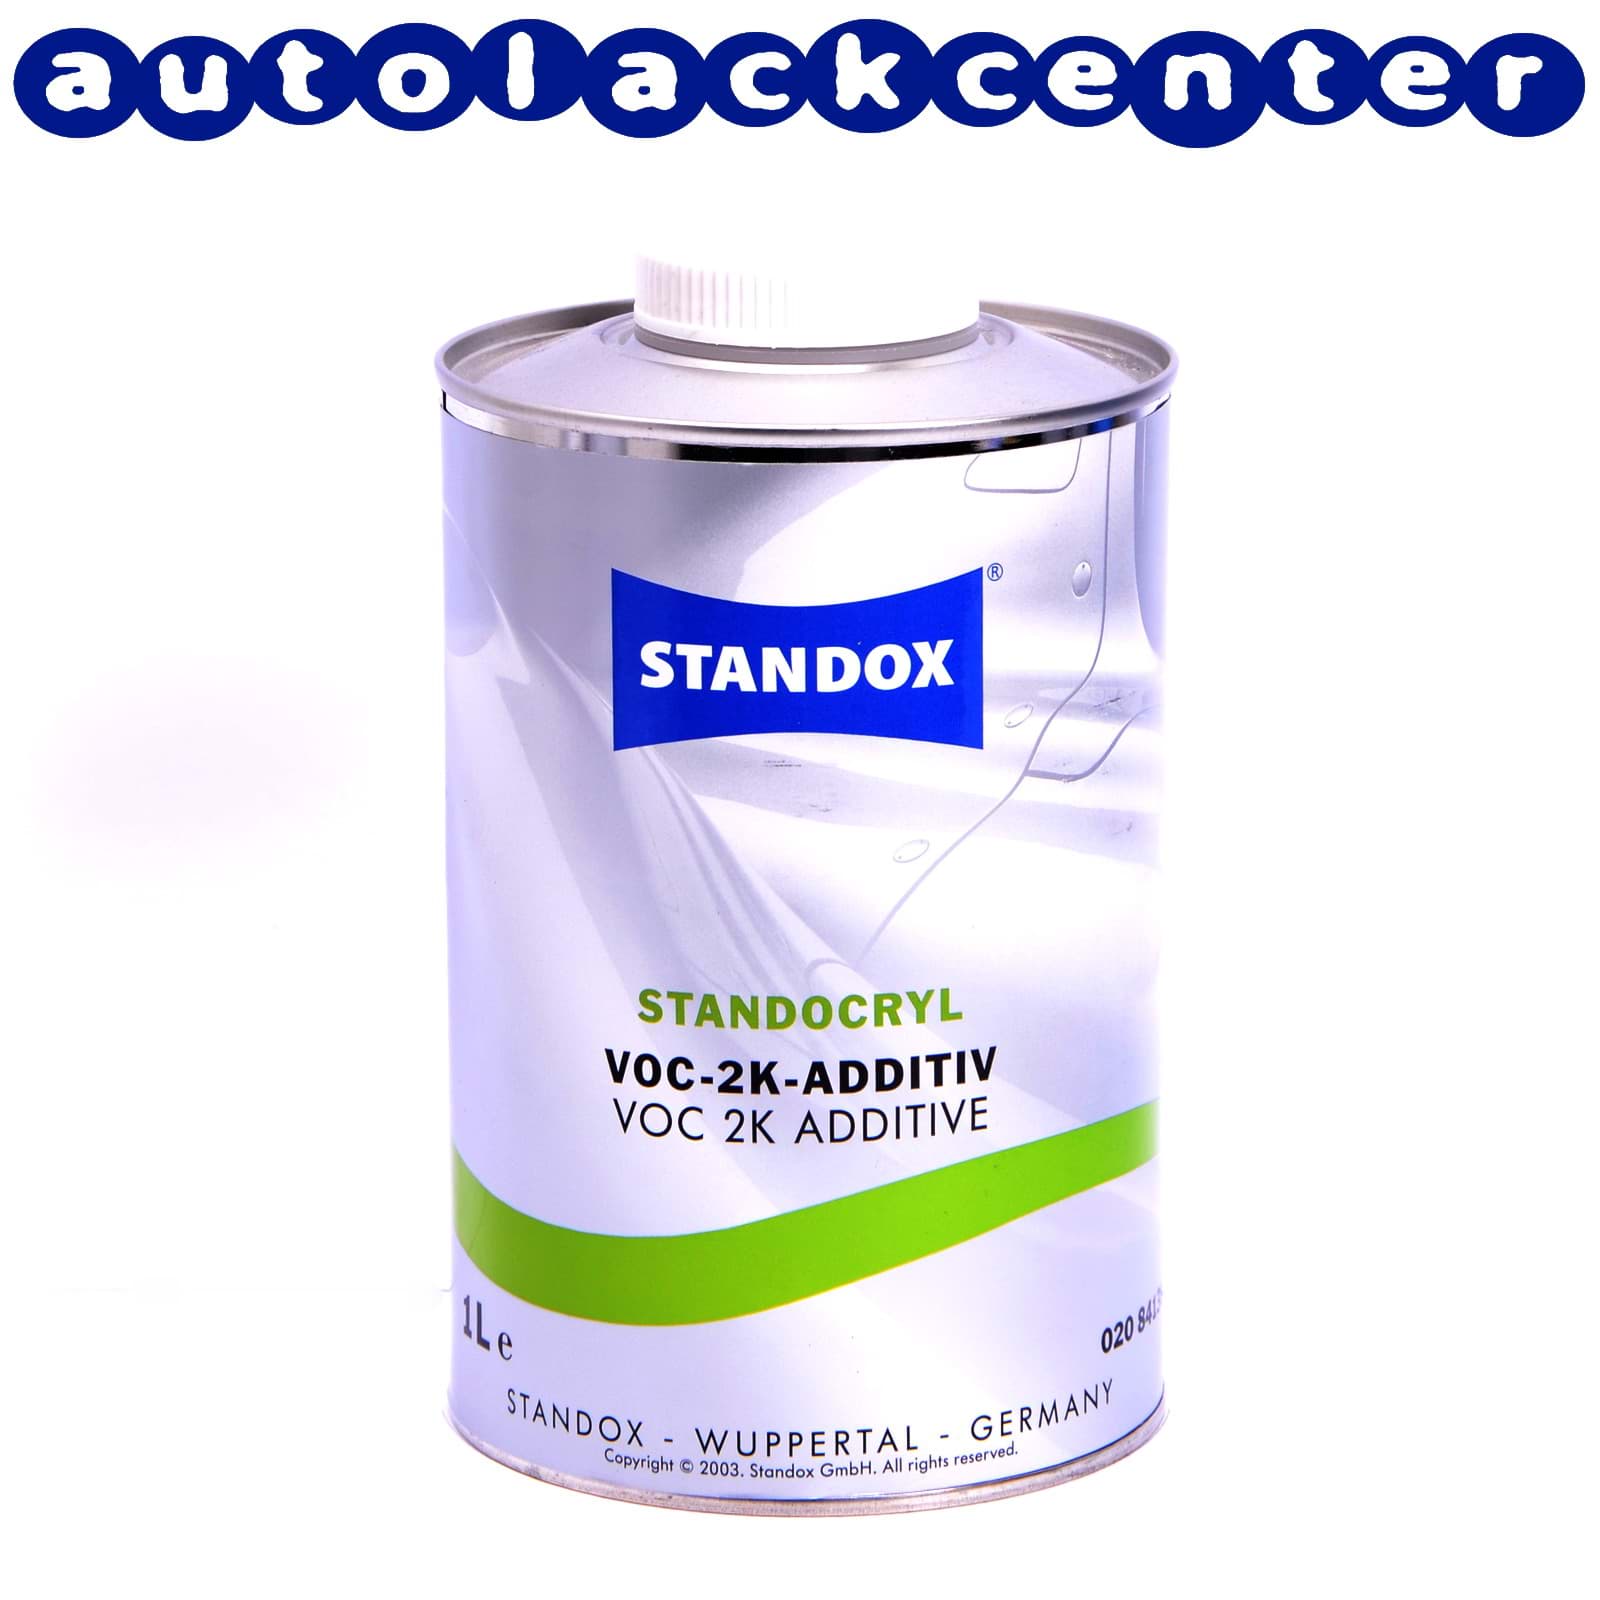 Standox Standocryl VOC-2K-Additiv 1Liter resmi